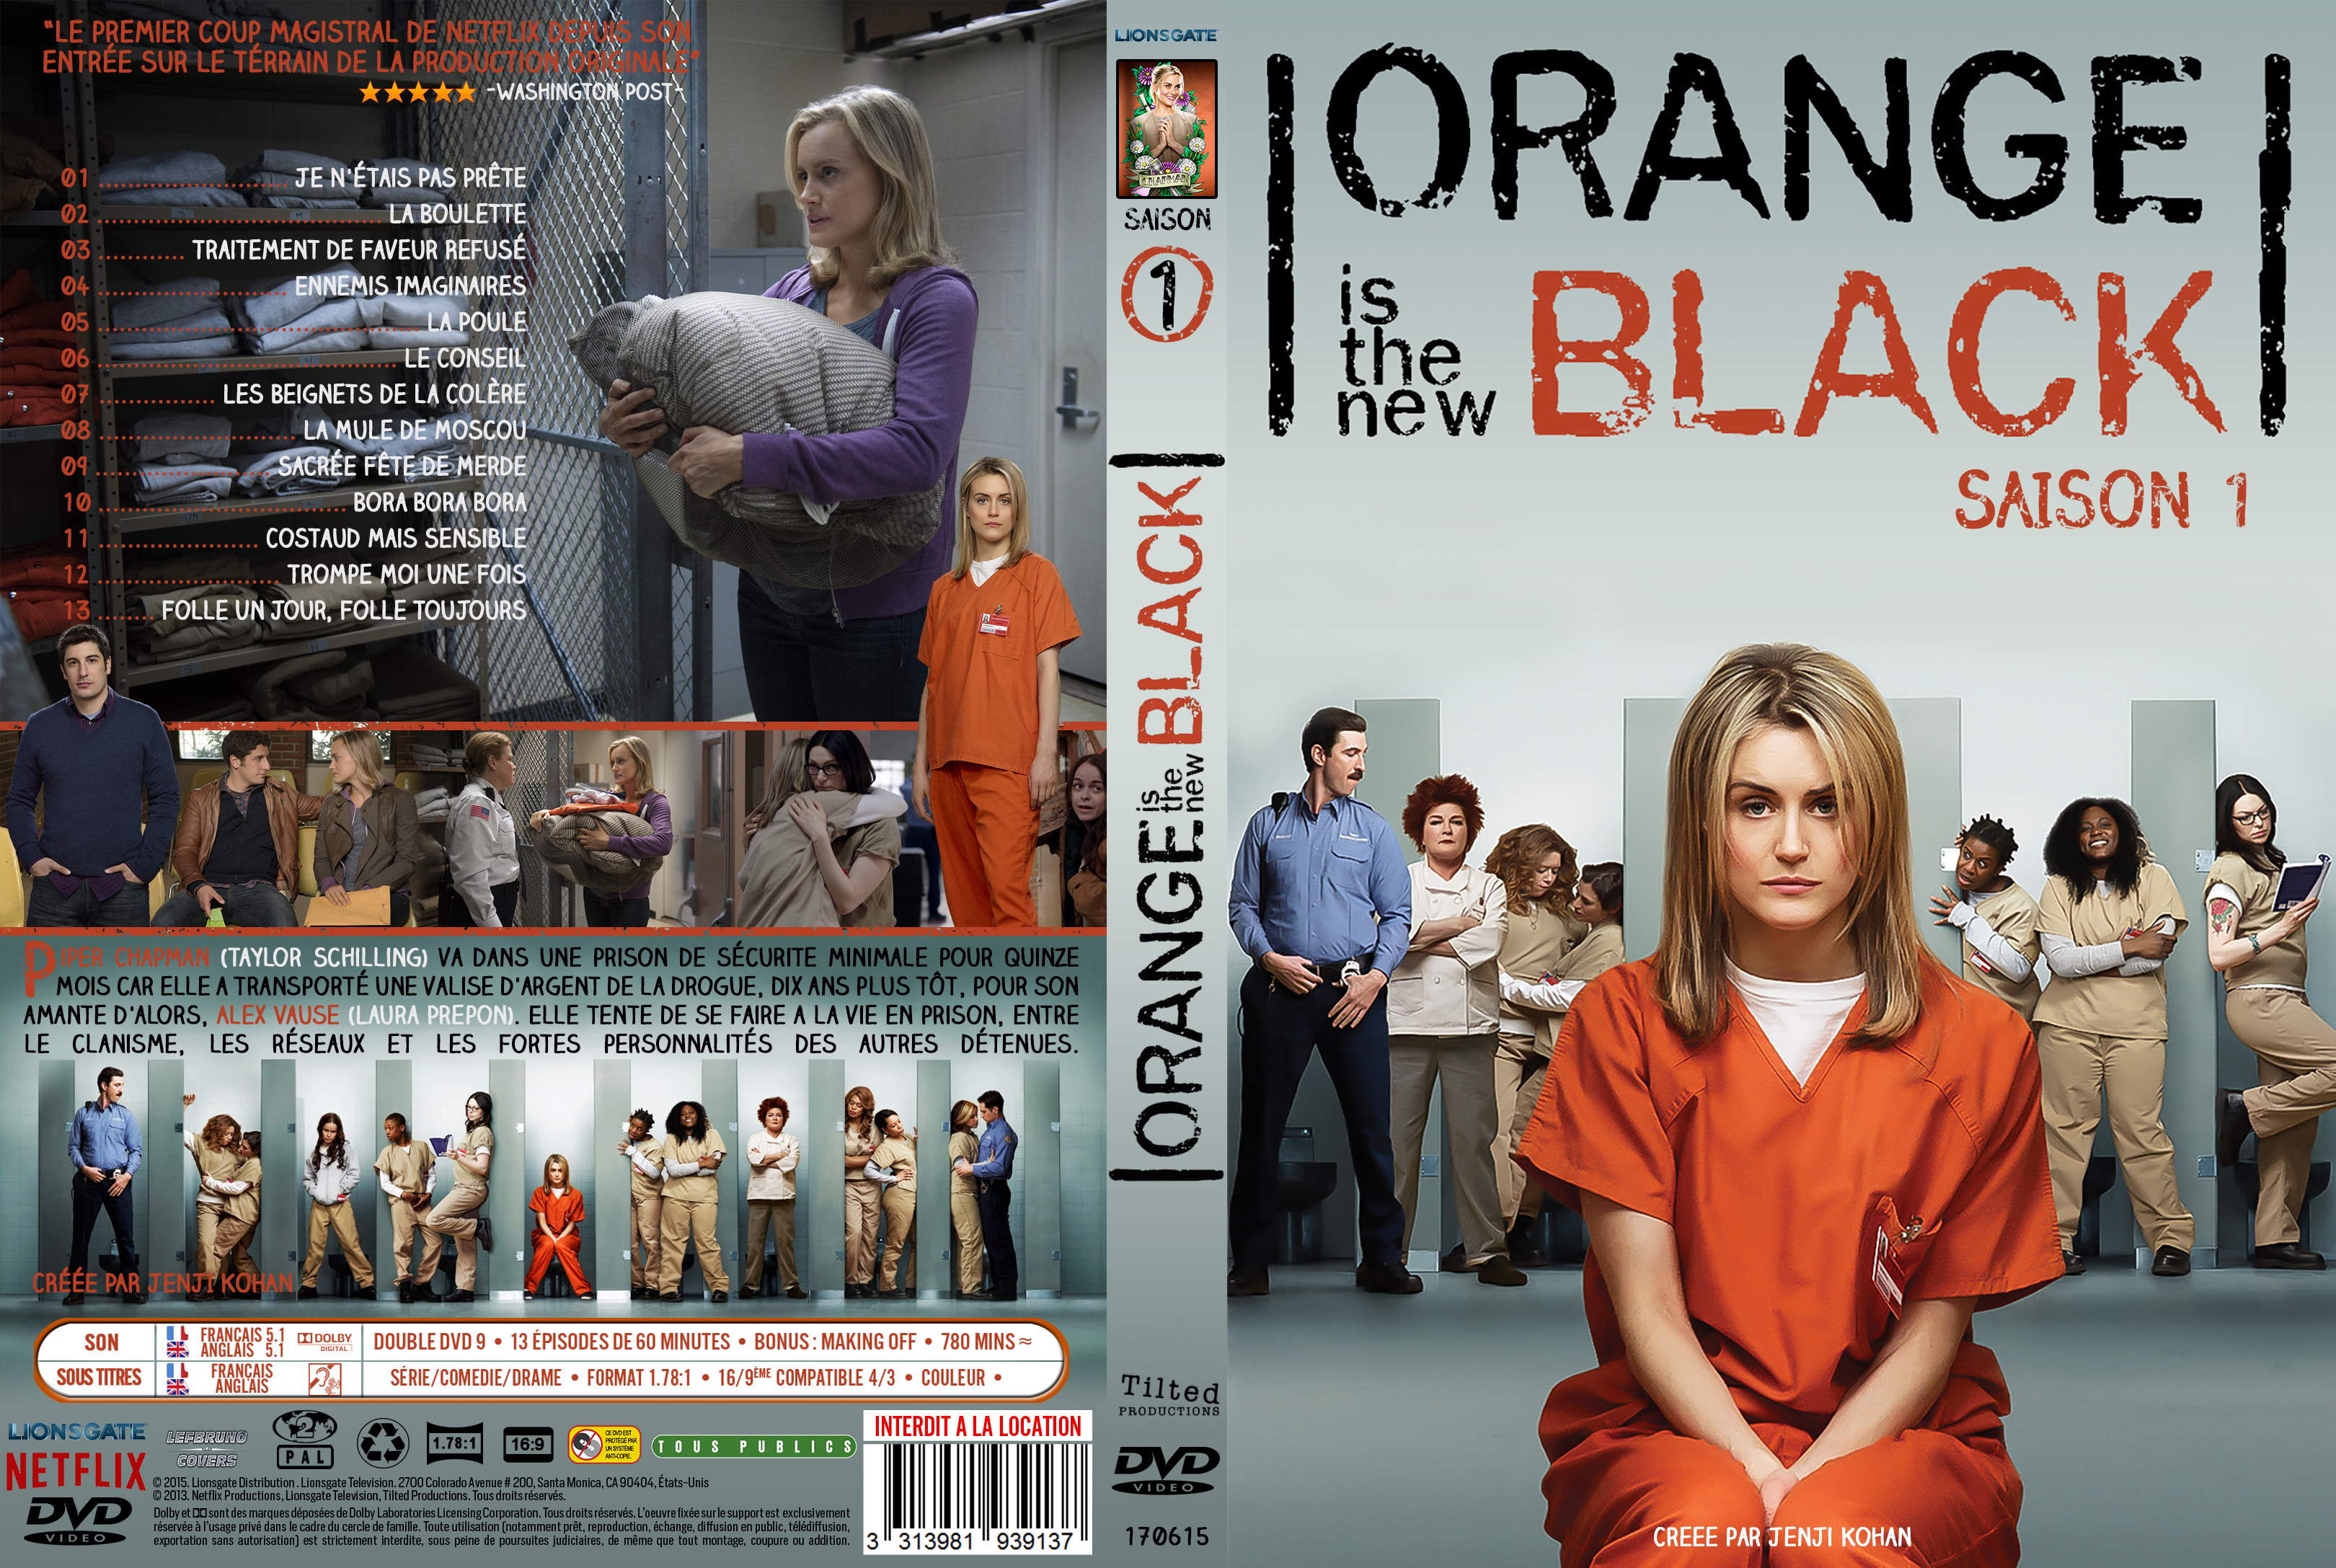 Jaquette DVD Orange Is The New Black Saison 1 custom